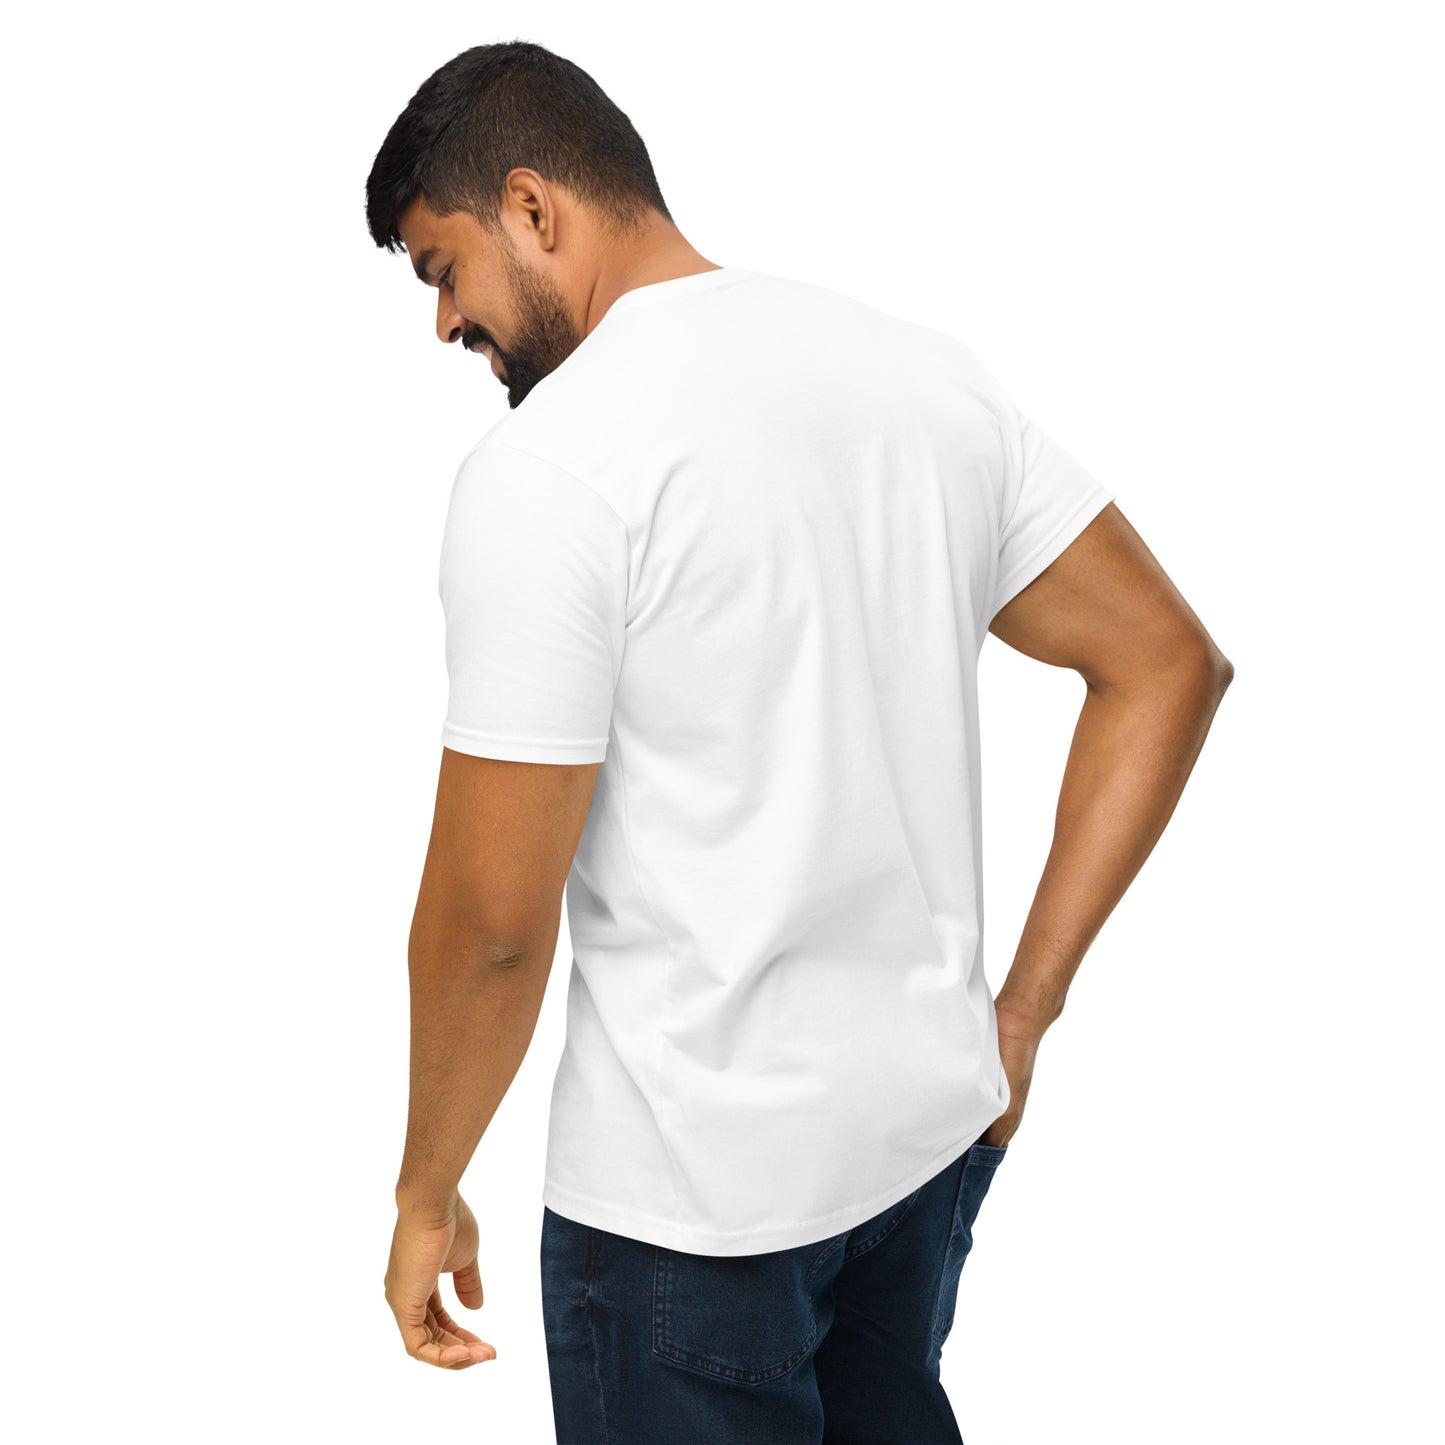 Be Strong Men's 100% Organic Cotton T-Shirt